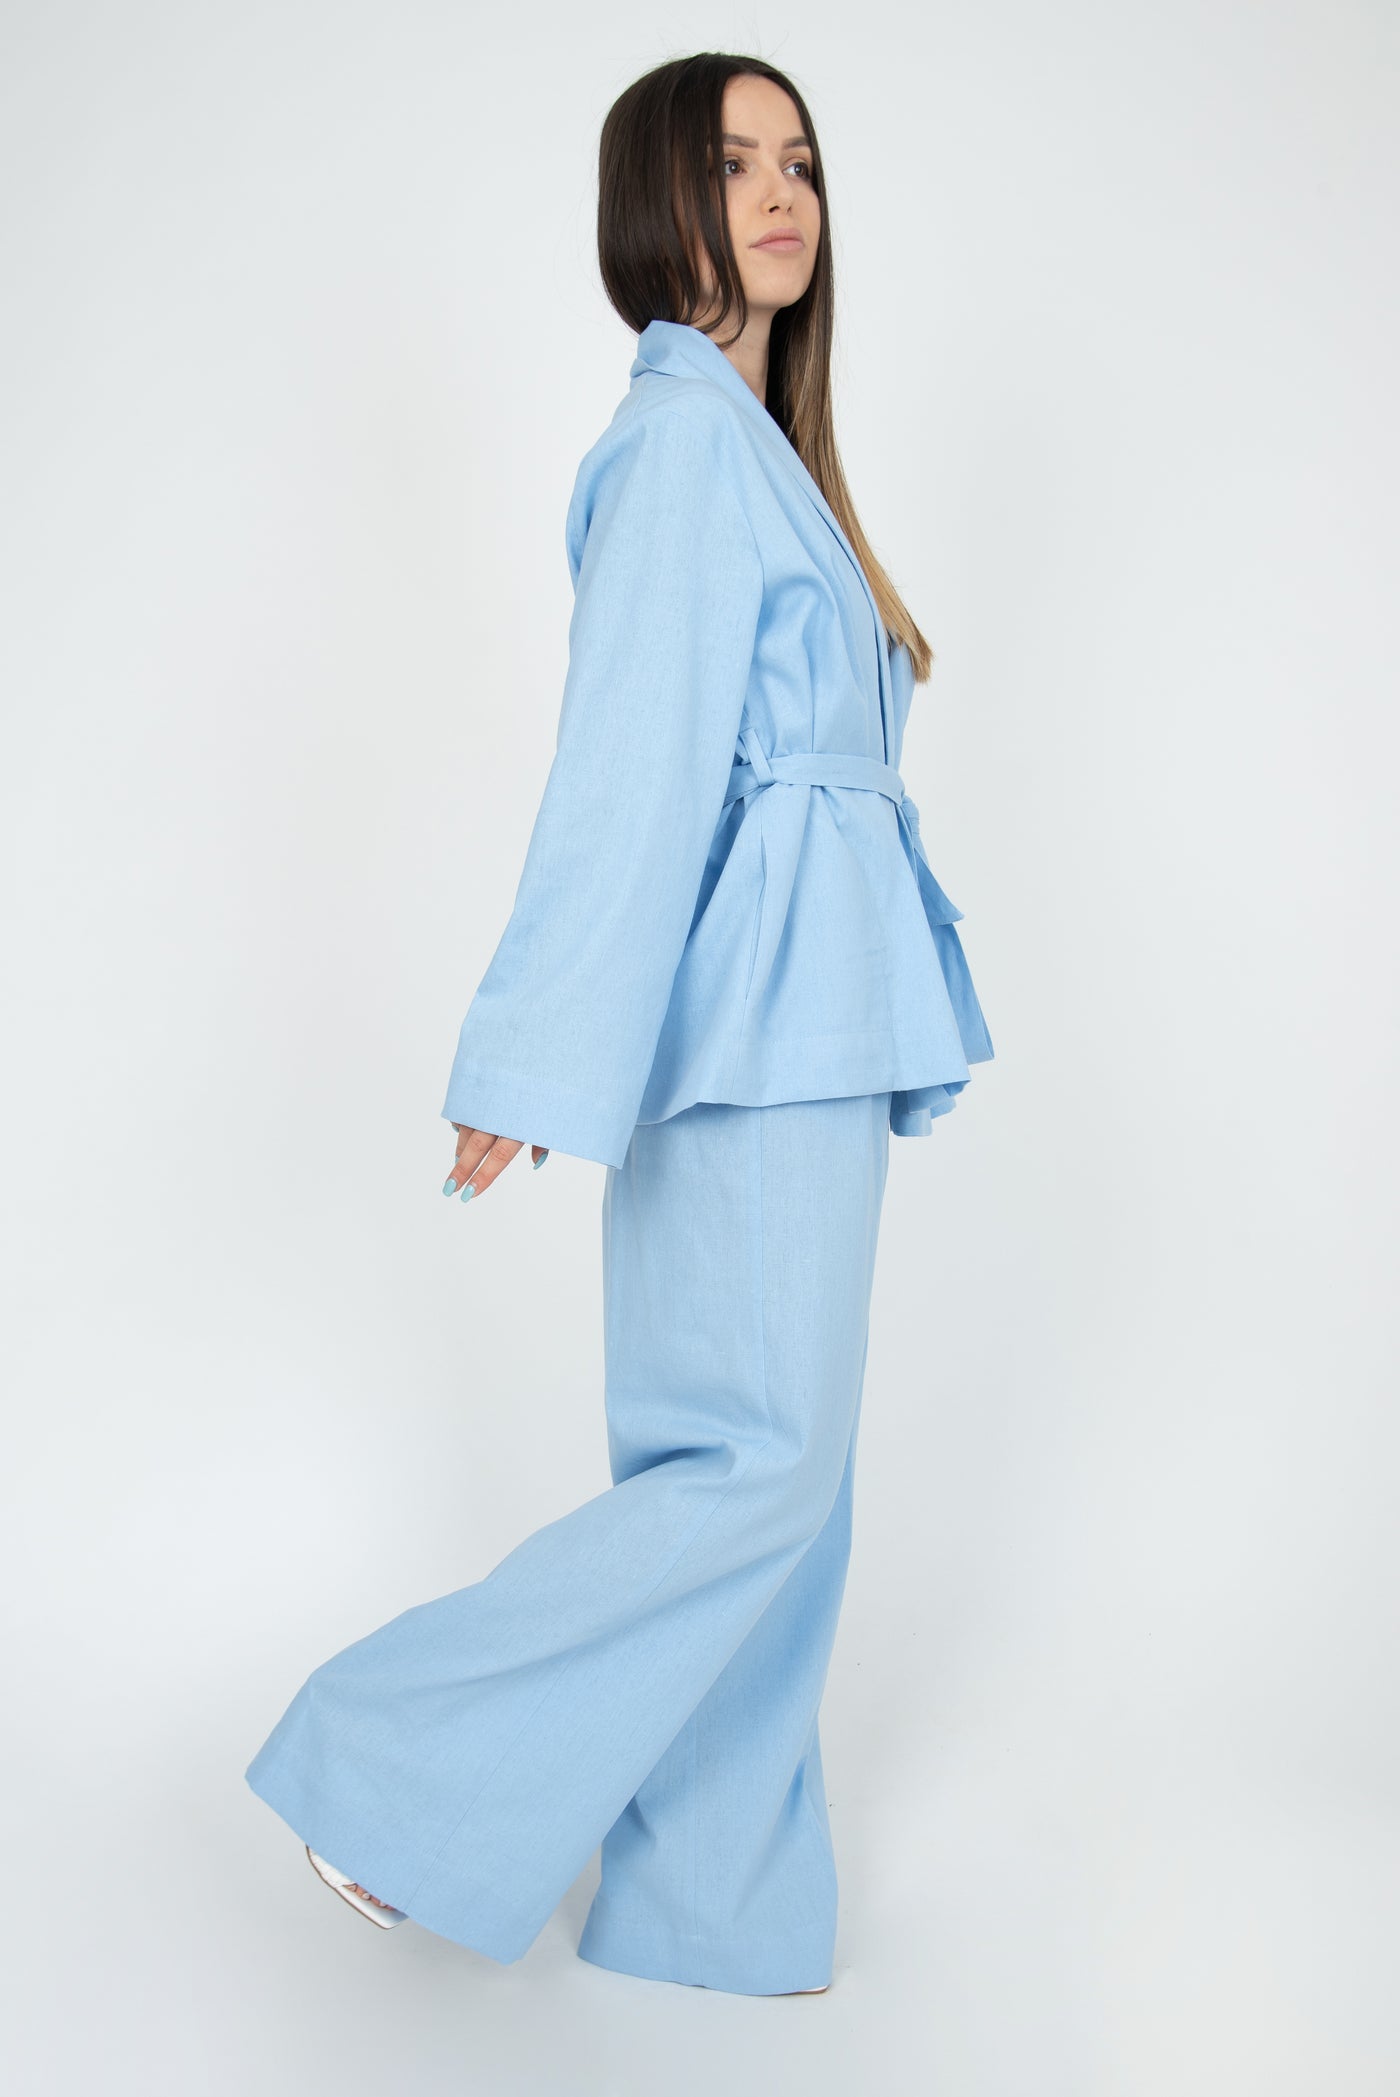 Blue linen kimono set